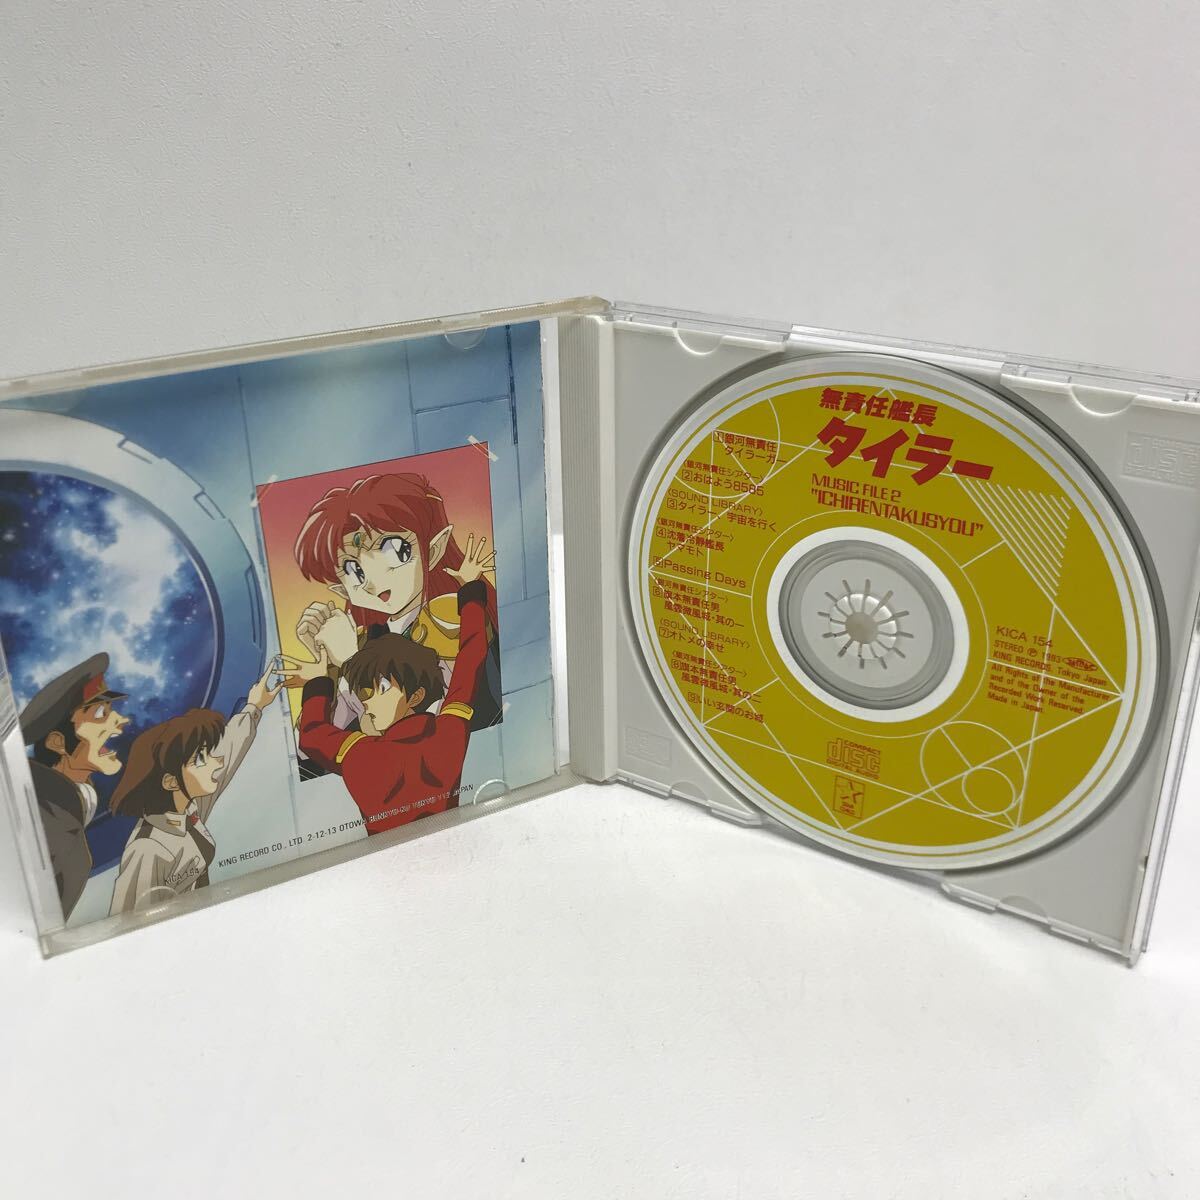 I0507A3 суммировать * Musekinin Kanchou Tylor CD 4 шт комплект музыка аниме песни из аниме / MUSIC FILE SENTEISSYOU / FILE 2 ICHIRENTAKUSYOU др. 